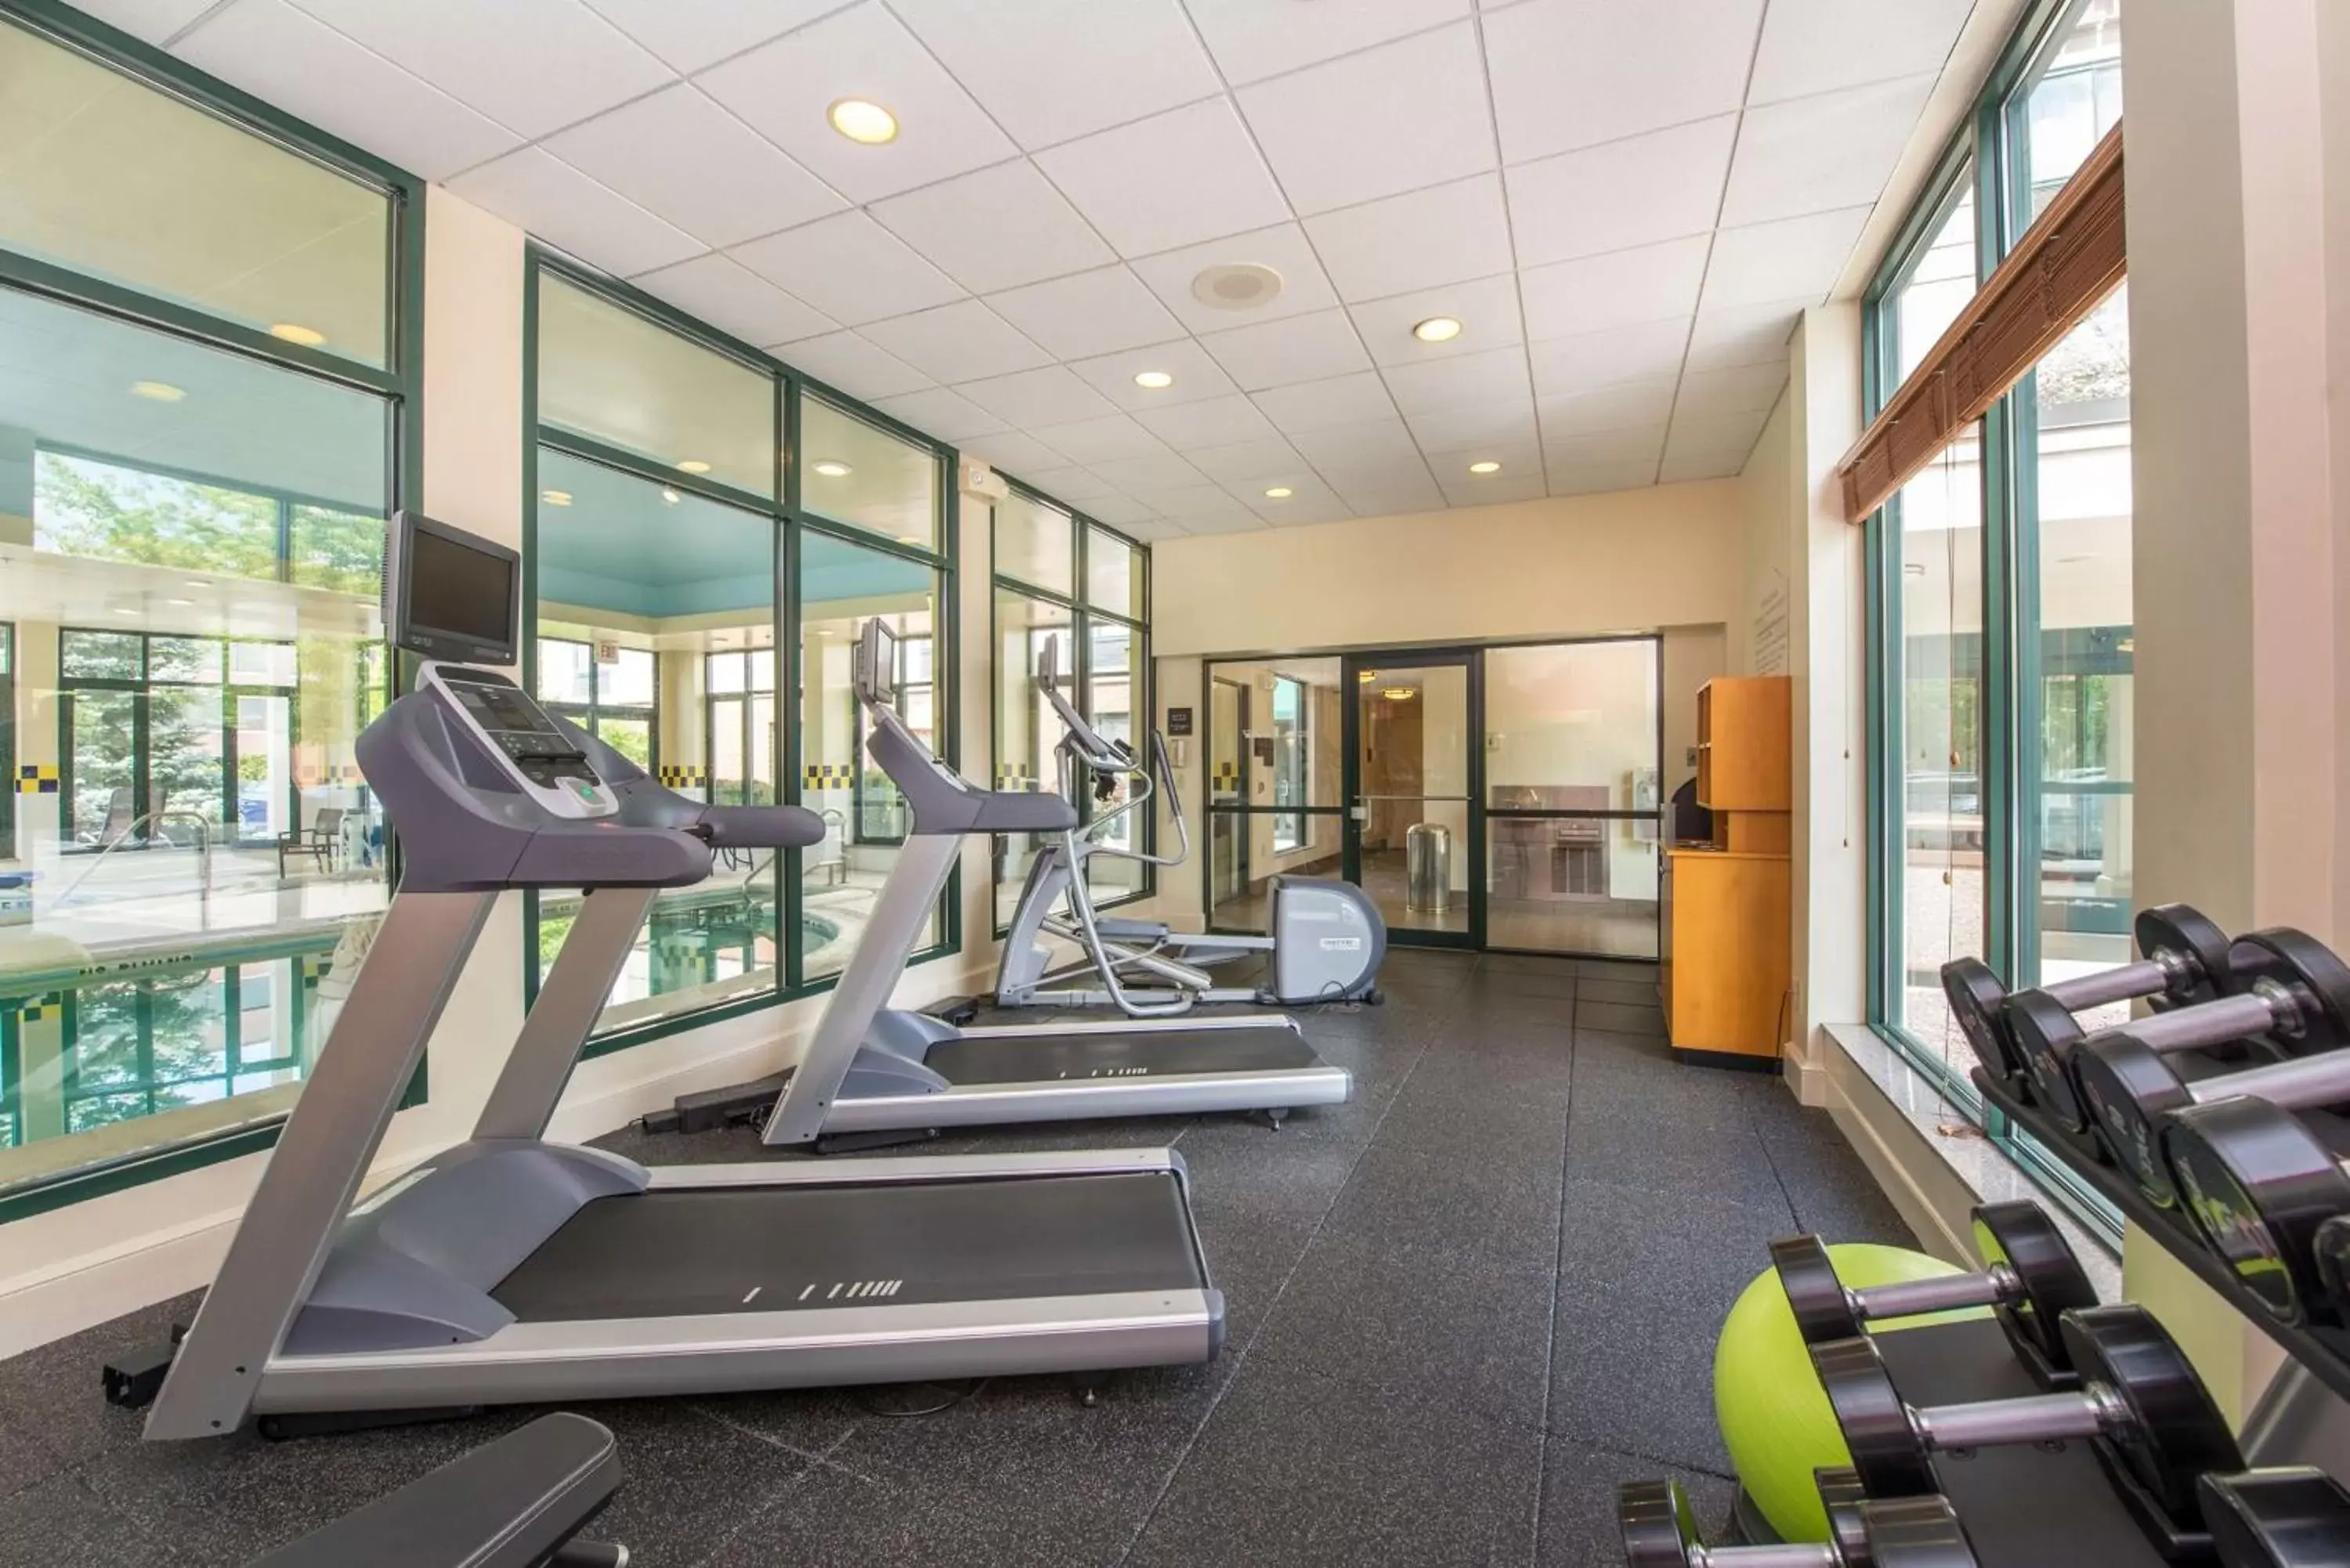 Fitness centre/facilities, Fitness Center/Facilities in Hilton Garden Inn Poughkeepsie/Fishkill